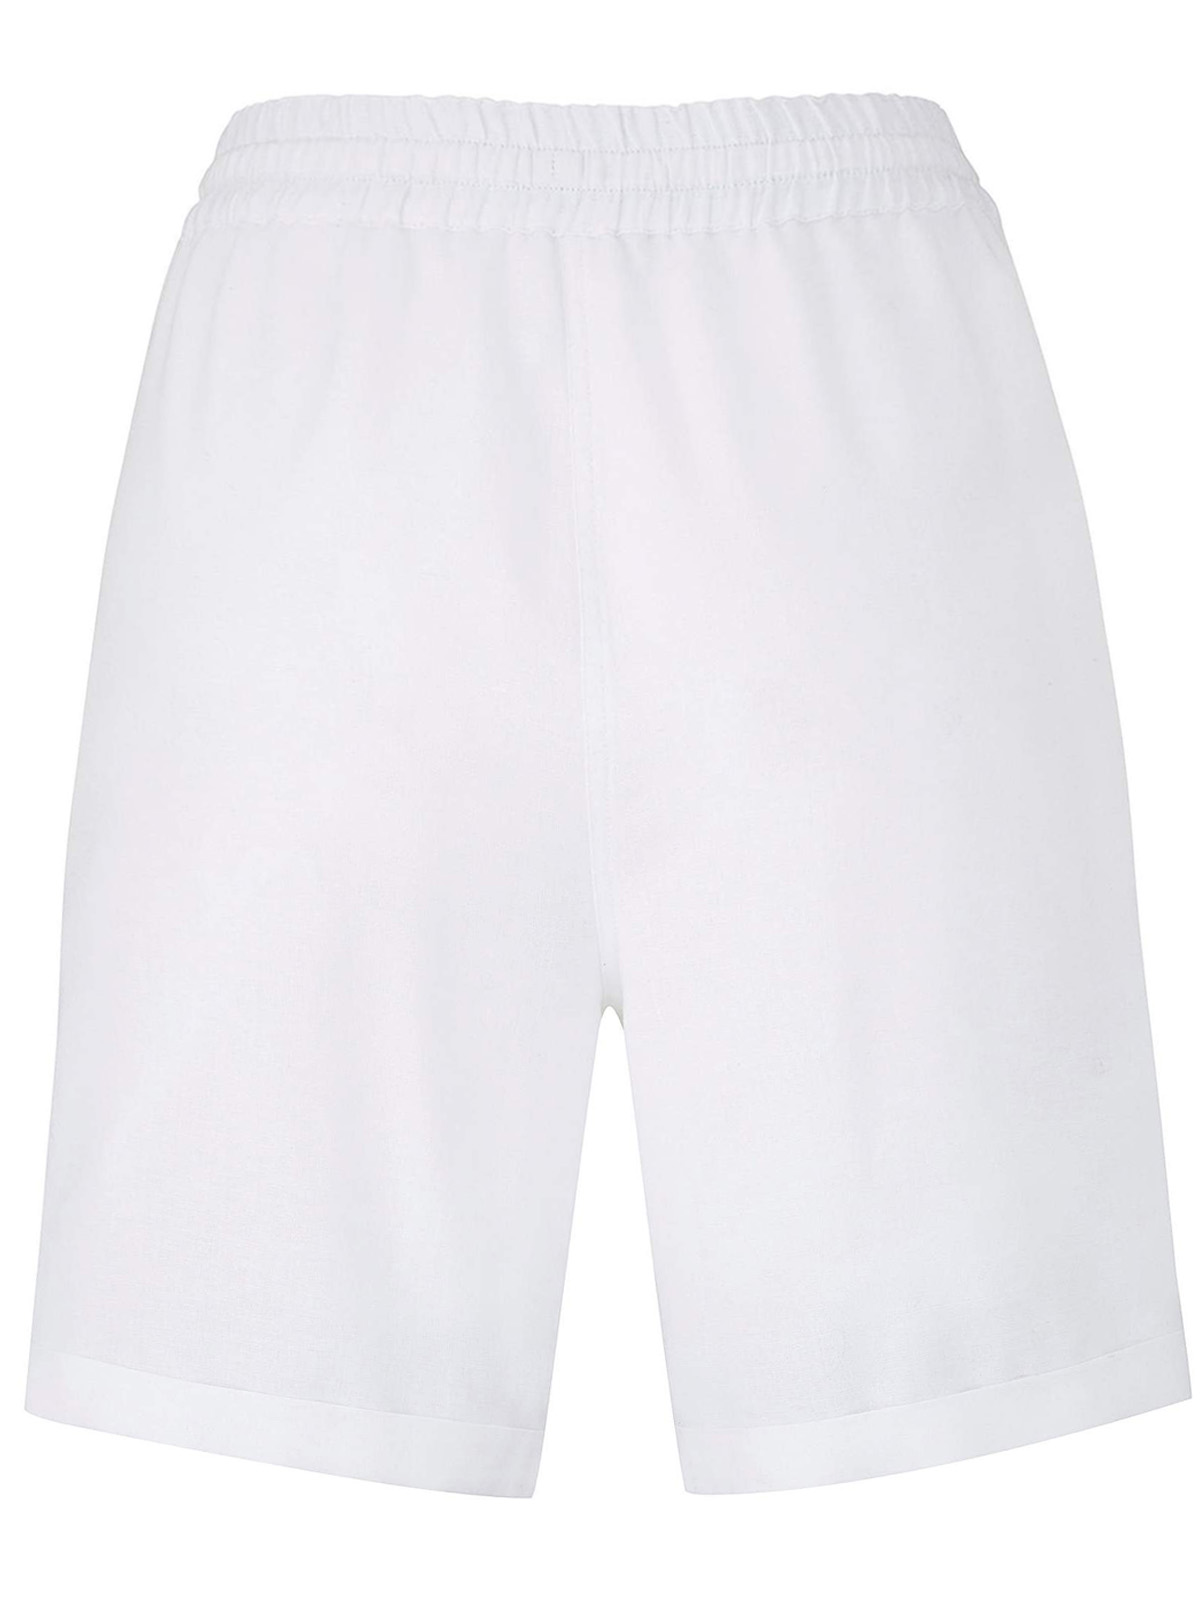 Capsule - - Capsule WHITE Petite Linen Blend Easy Care Shorts - Plus ...